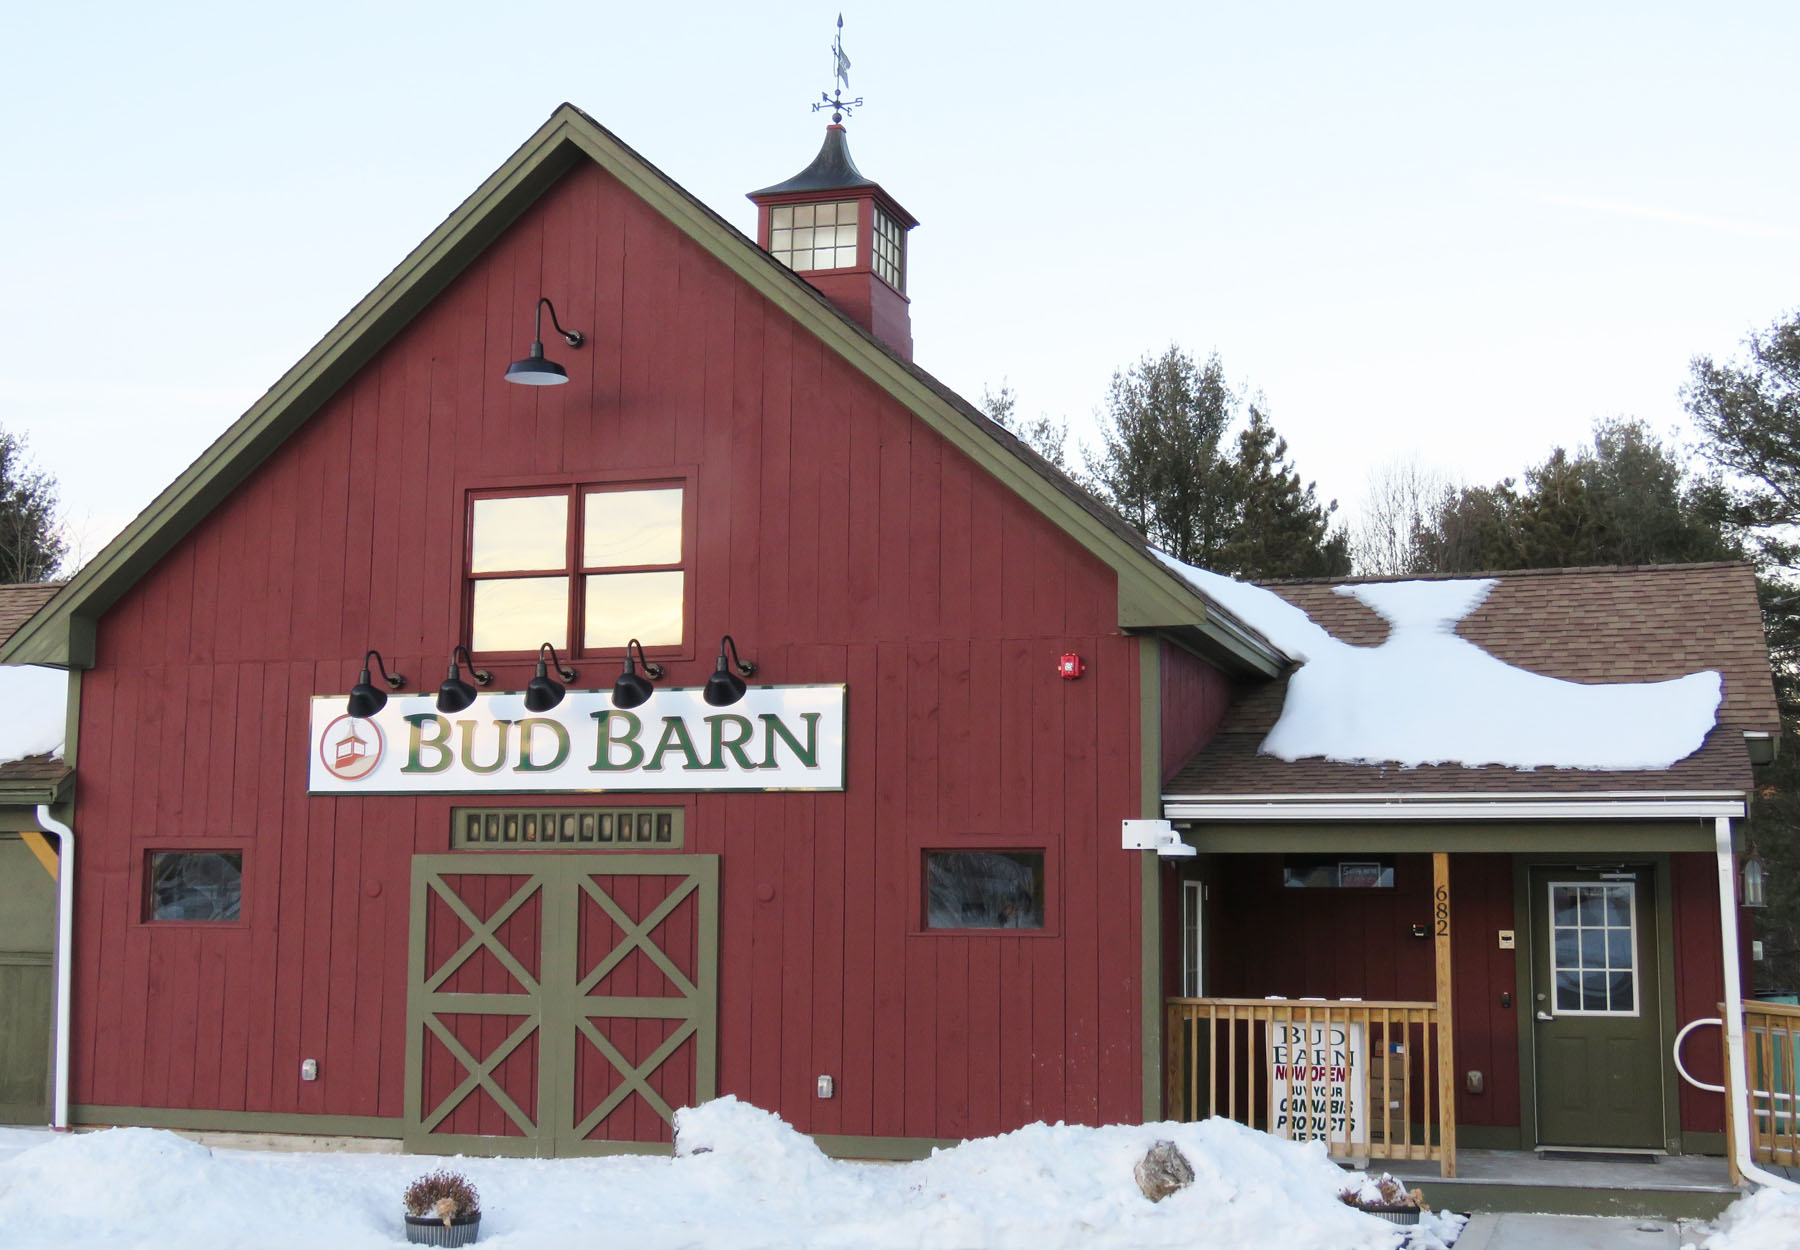 Bud Barn soft opening